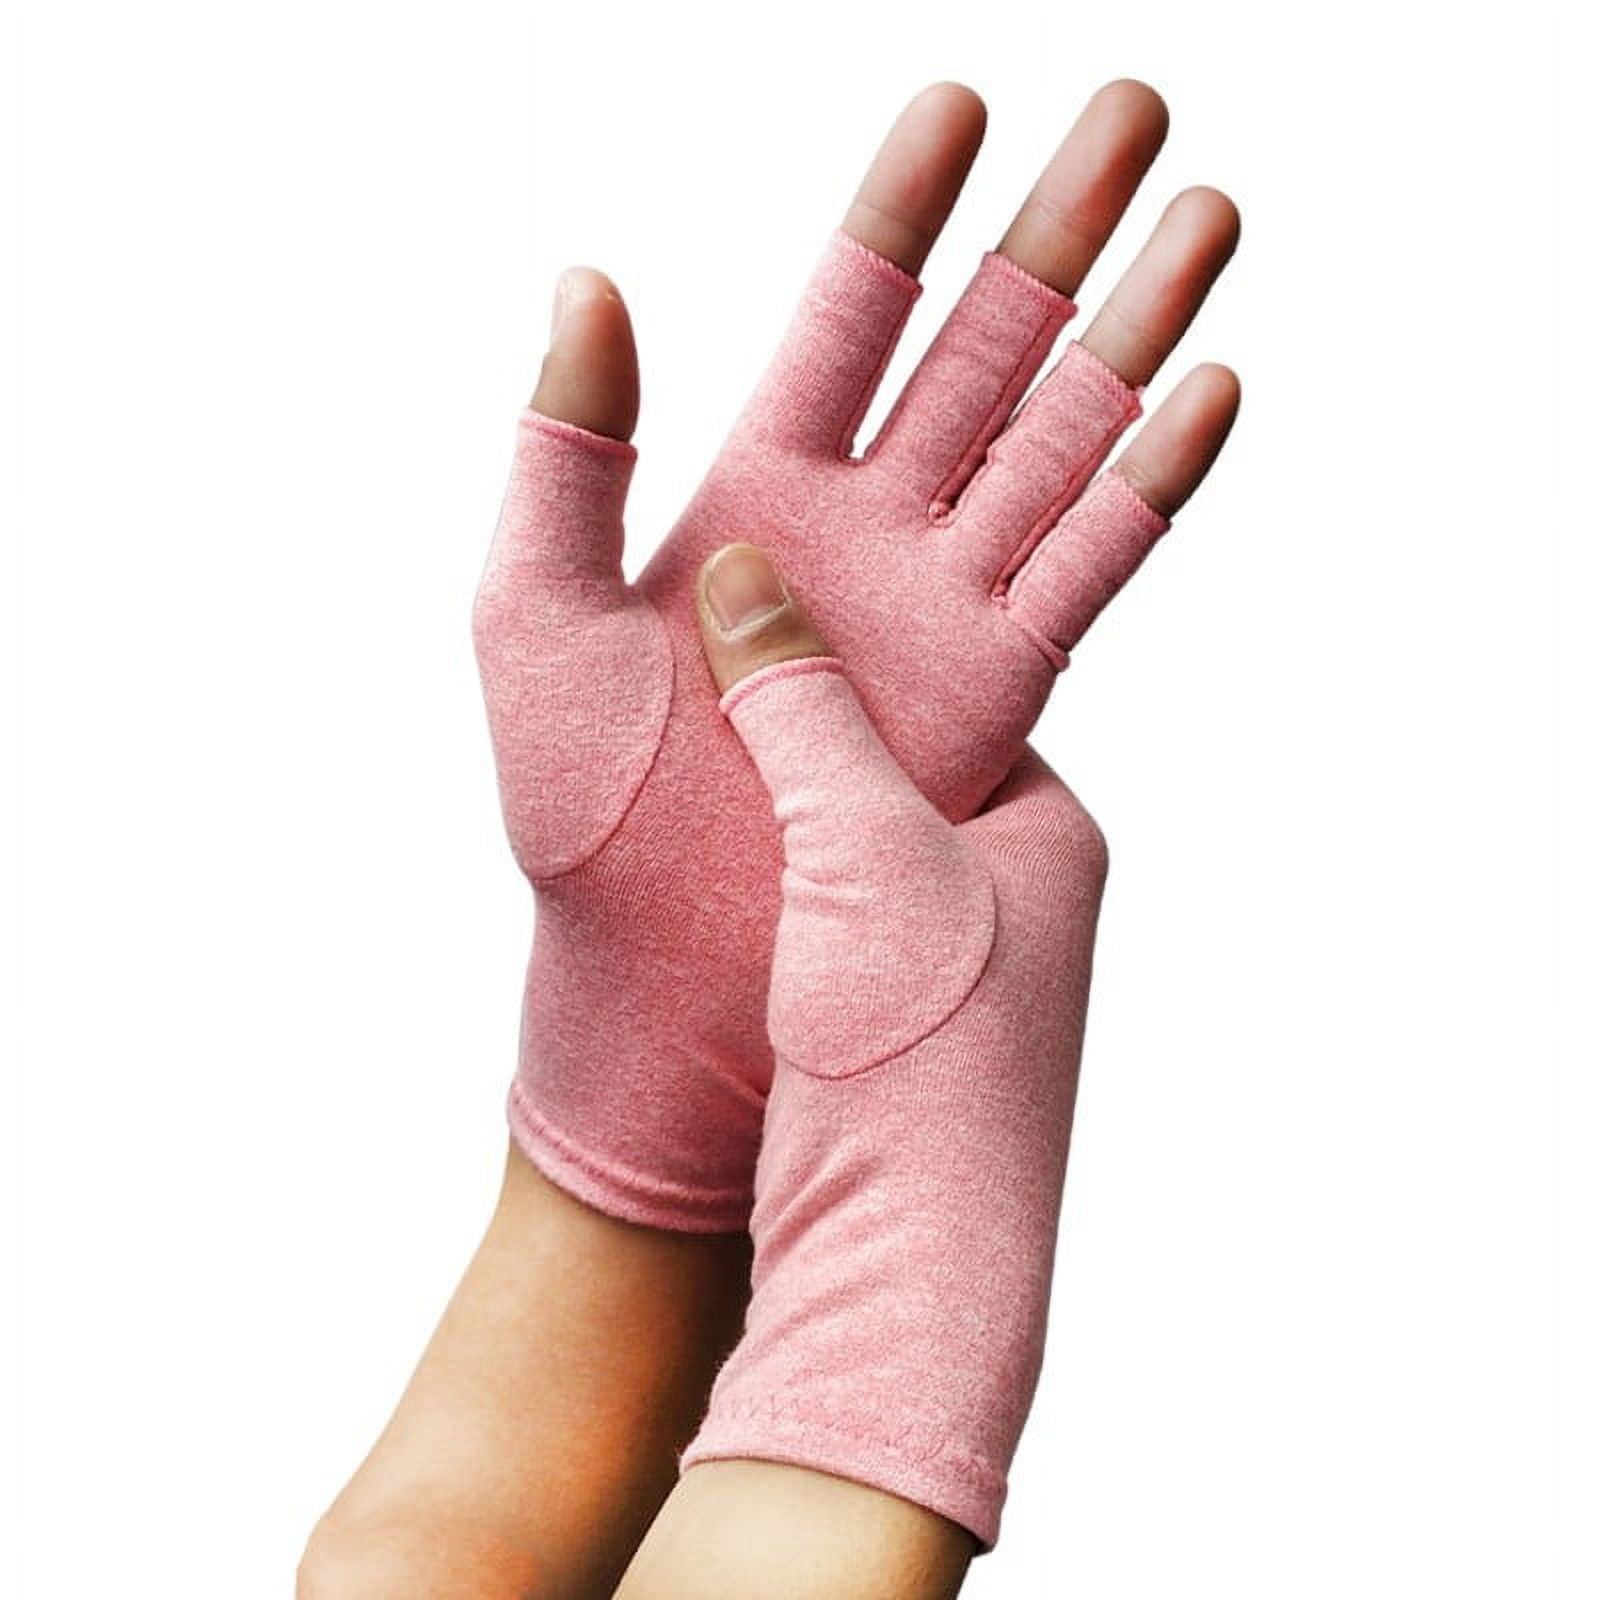 Cfxnmzgr Sports Safety Arthritis Gloves - Men, Women Rheumatoid Compression Hand Glove for Osteoarthrit, Adult Unisex, Size: Small, Clear